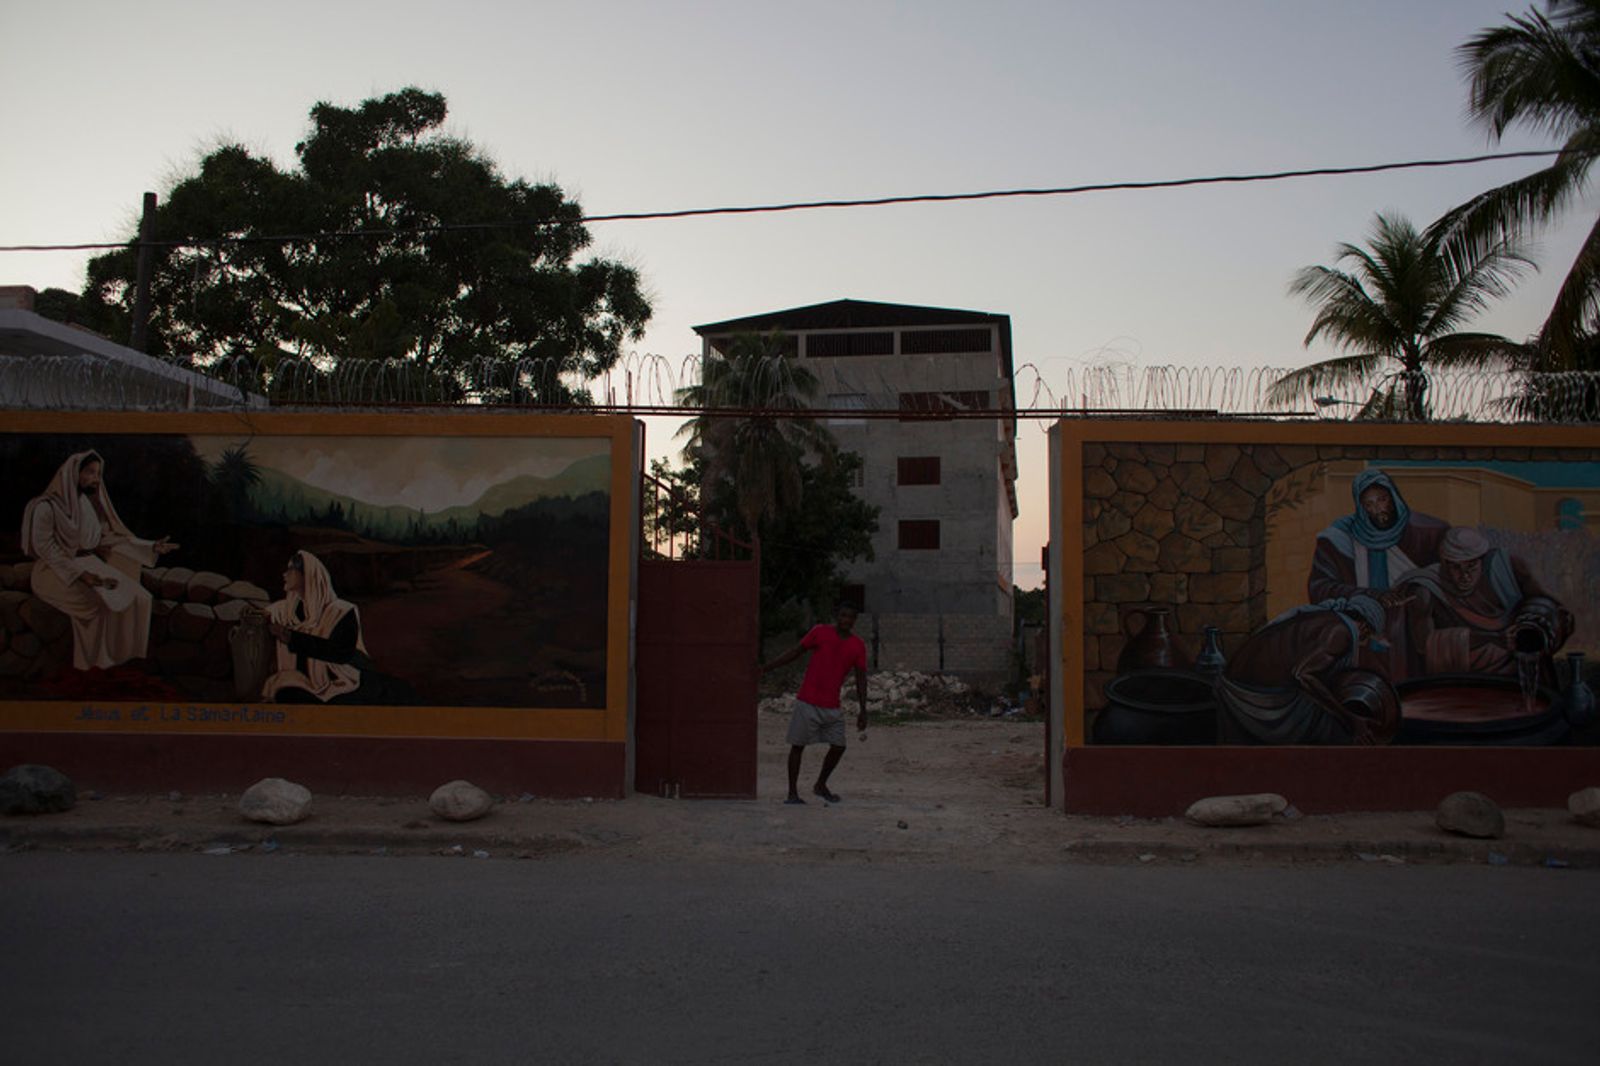 © Thomas Freteur - Image from the "Si Bondyé vlé" (If God wants) - Haiti, 2012 photography project